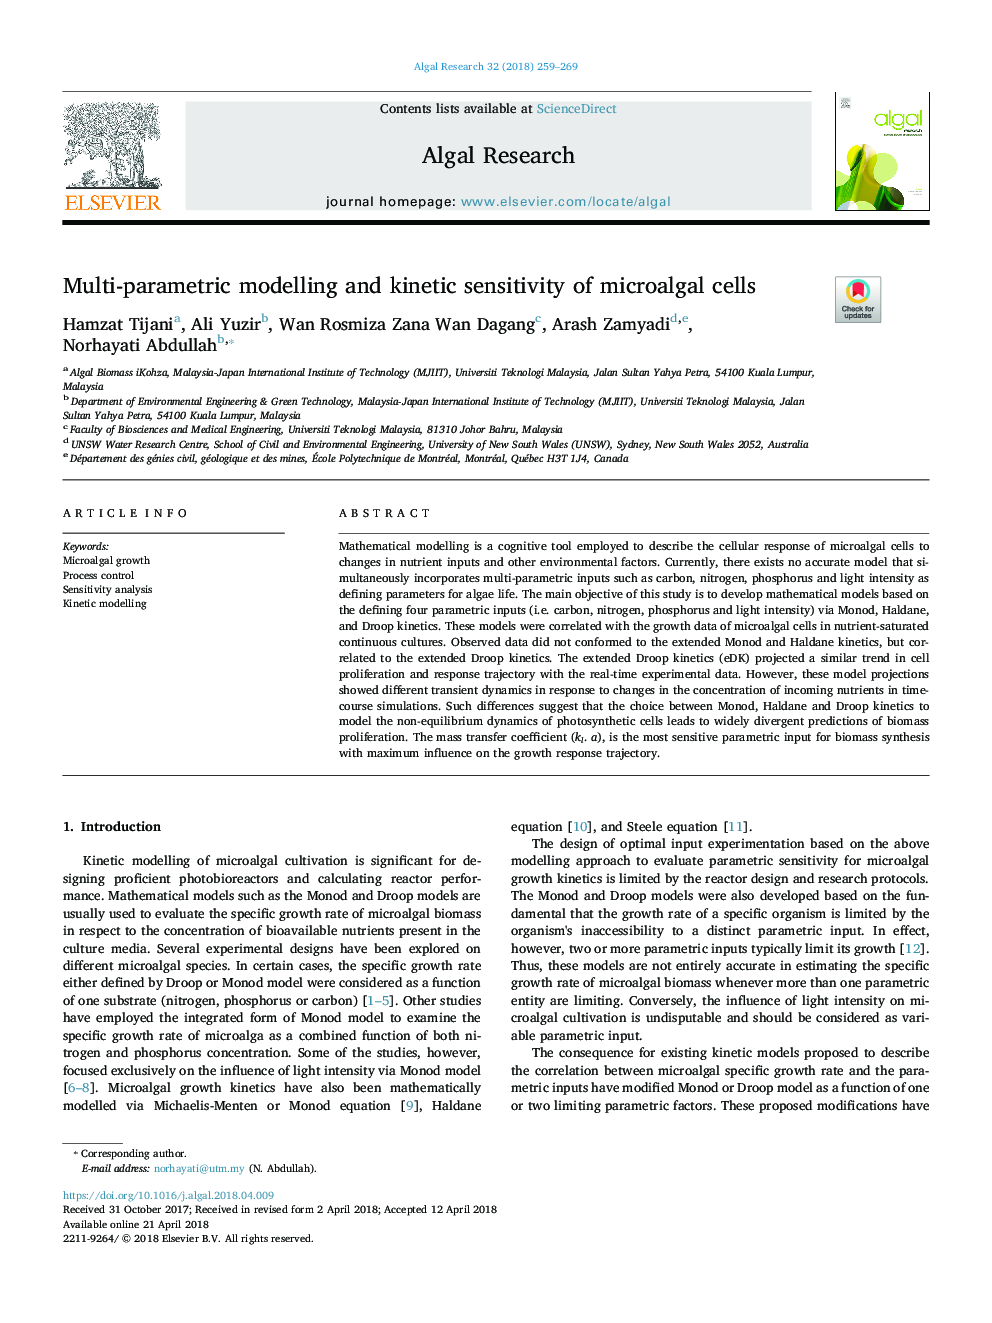 Multi-parametric modelling and kinetic sensitivity of microalgal cells